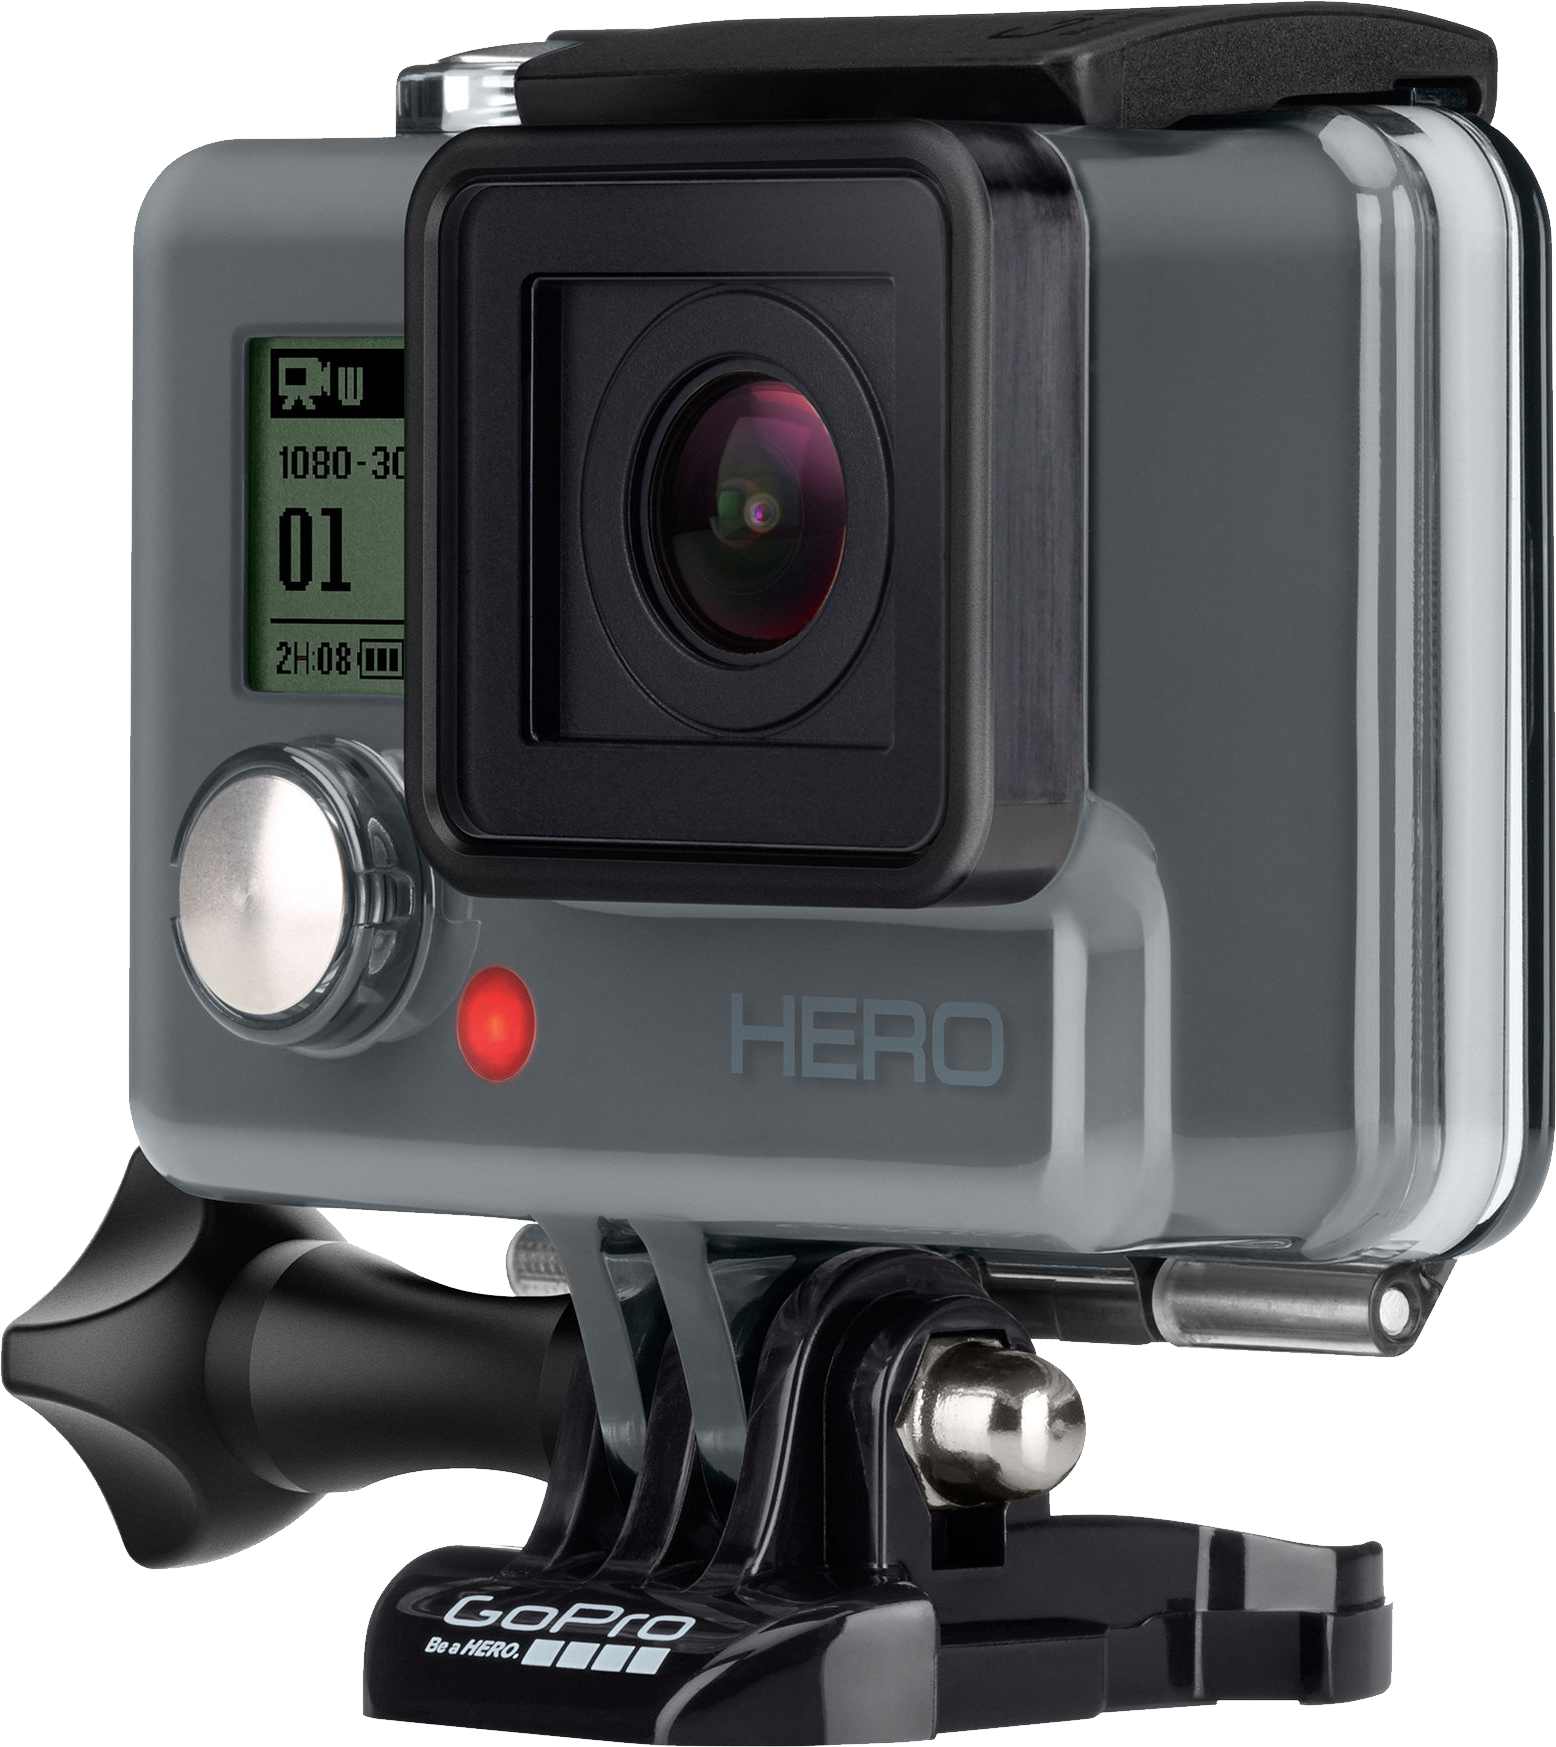 GoPro cameras